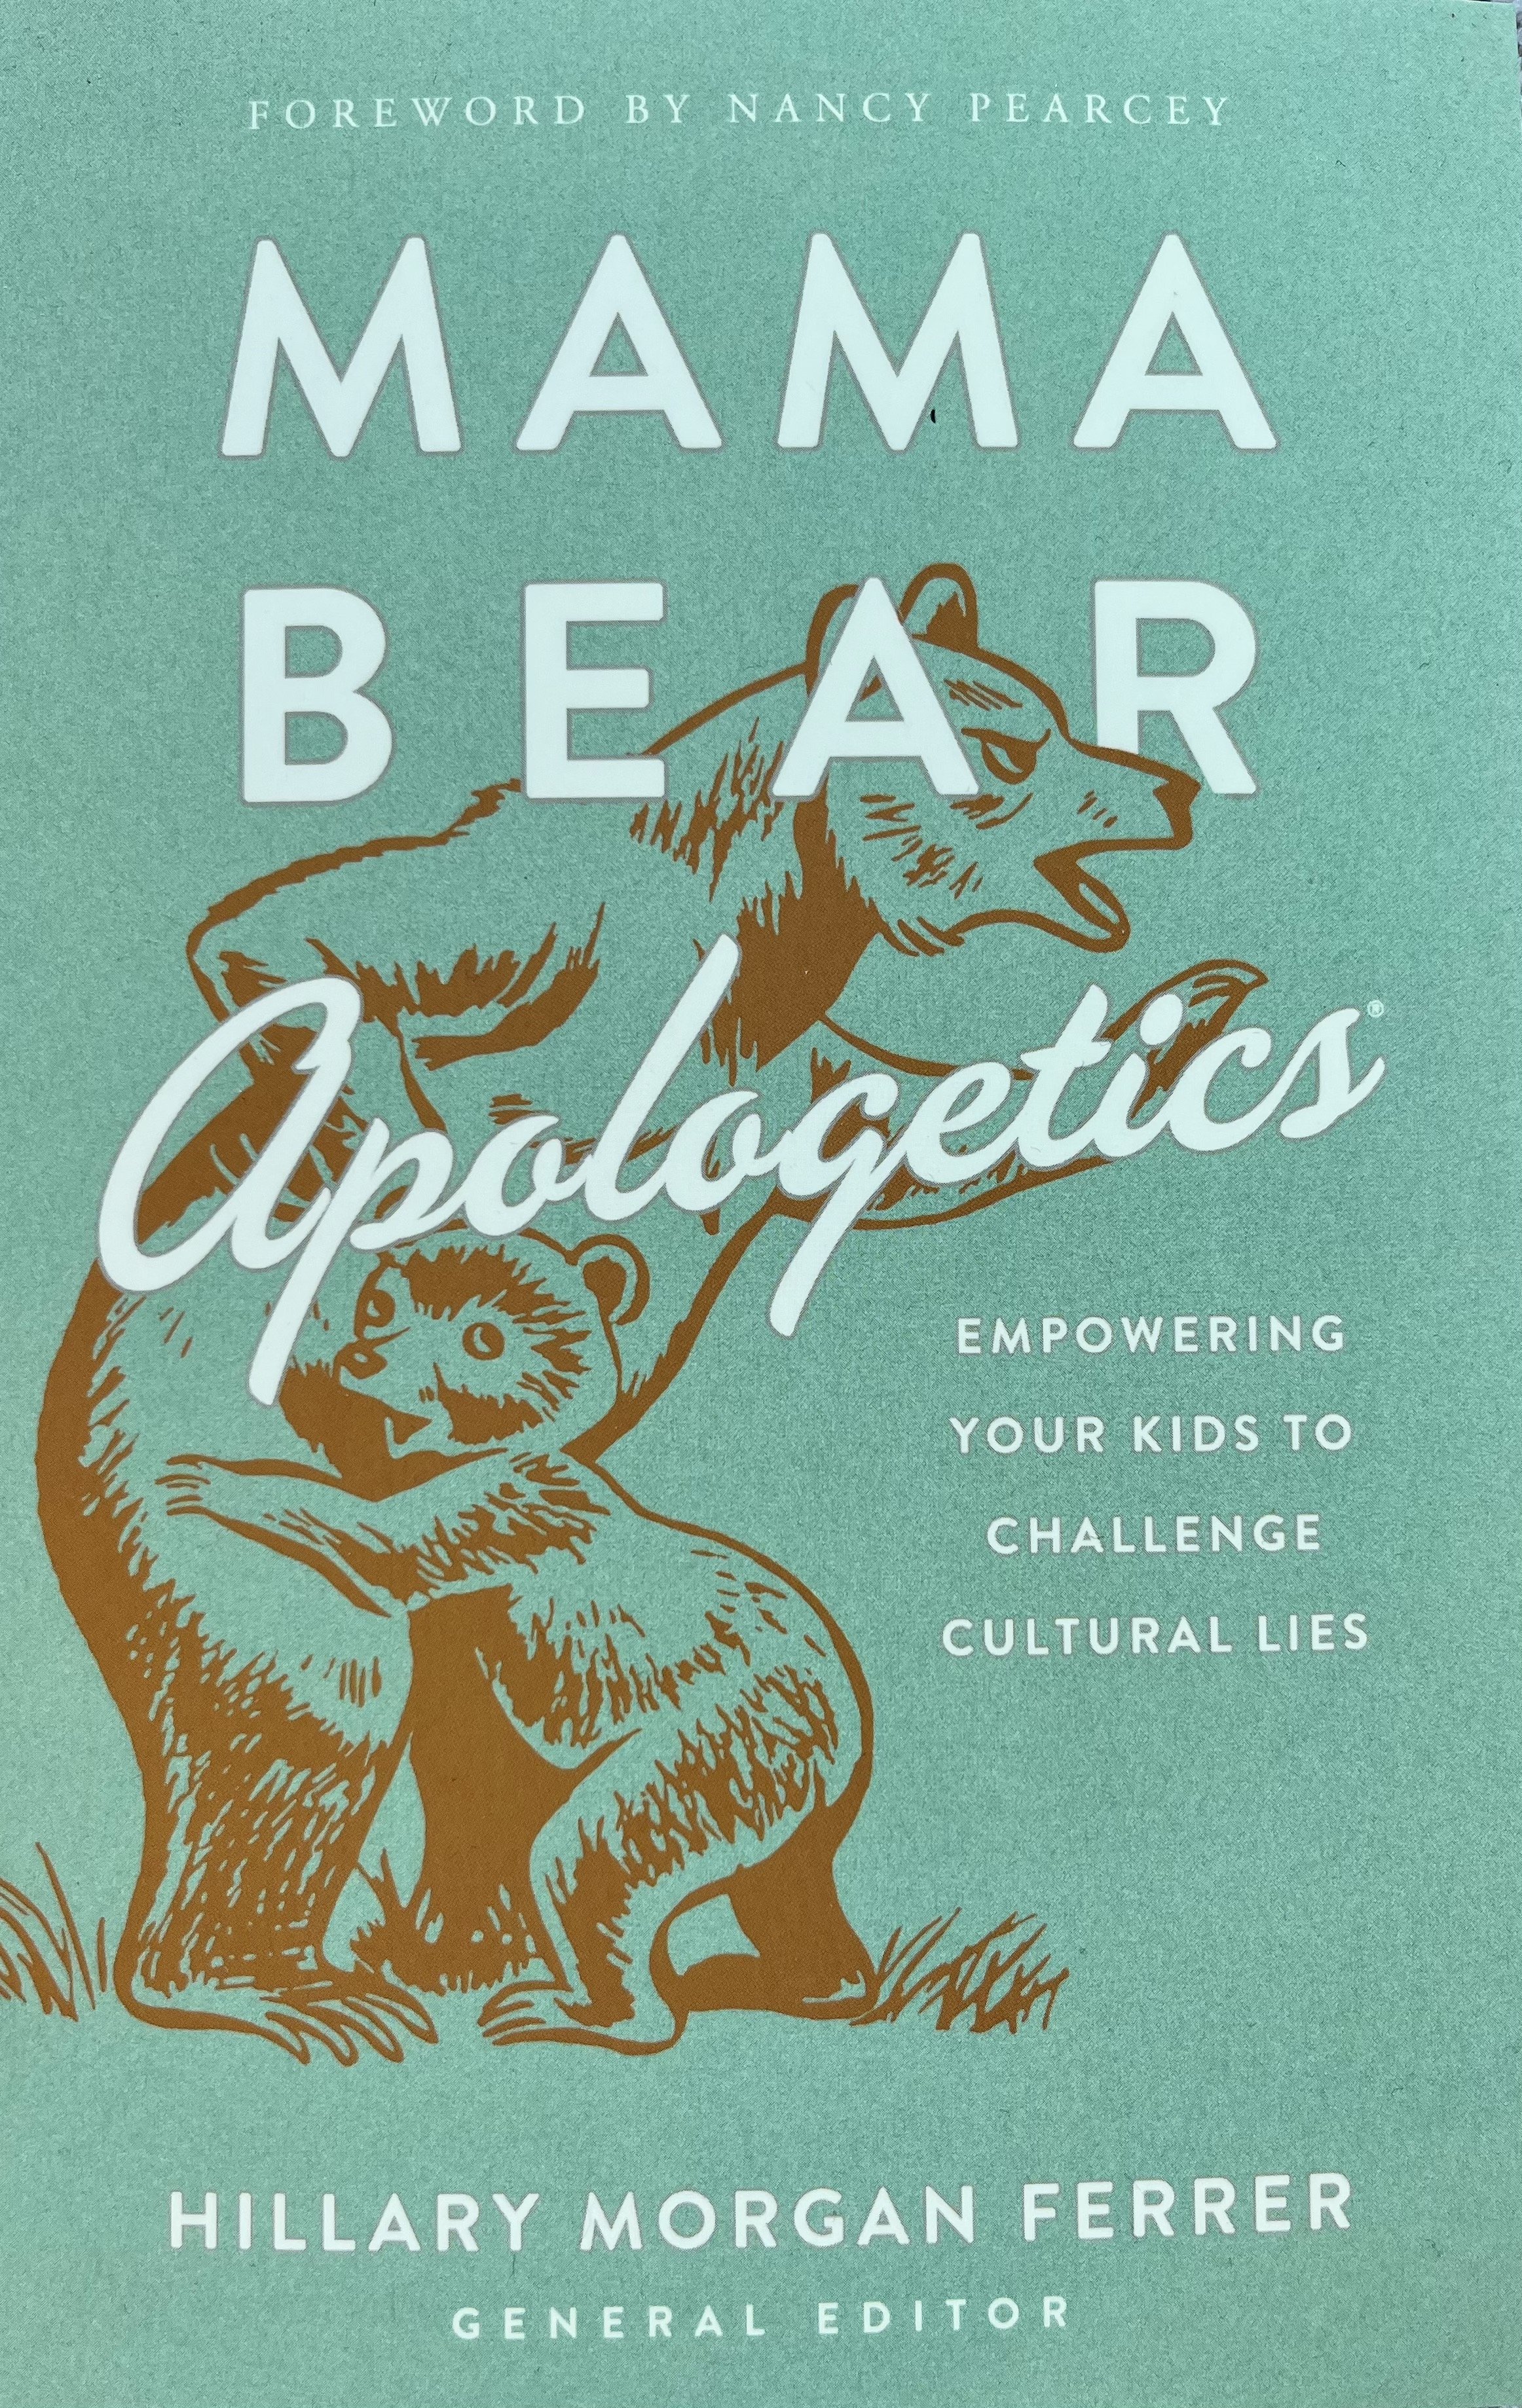 Mama Bear Apologetics Podcast - Mama Bear Apologetics